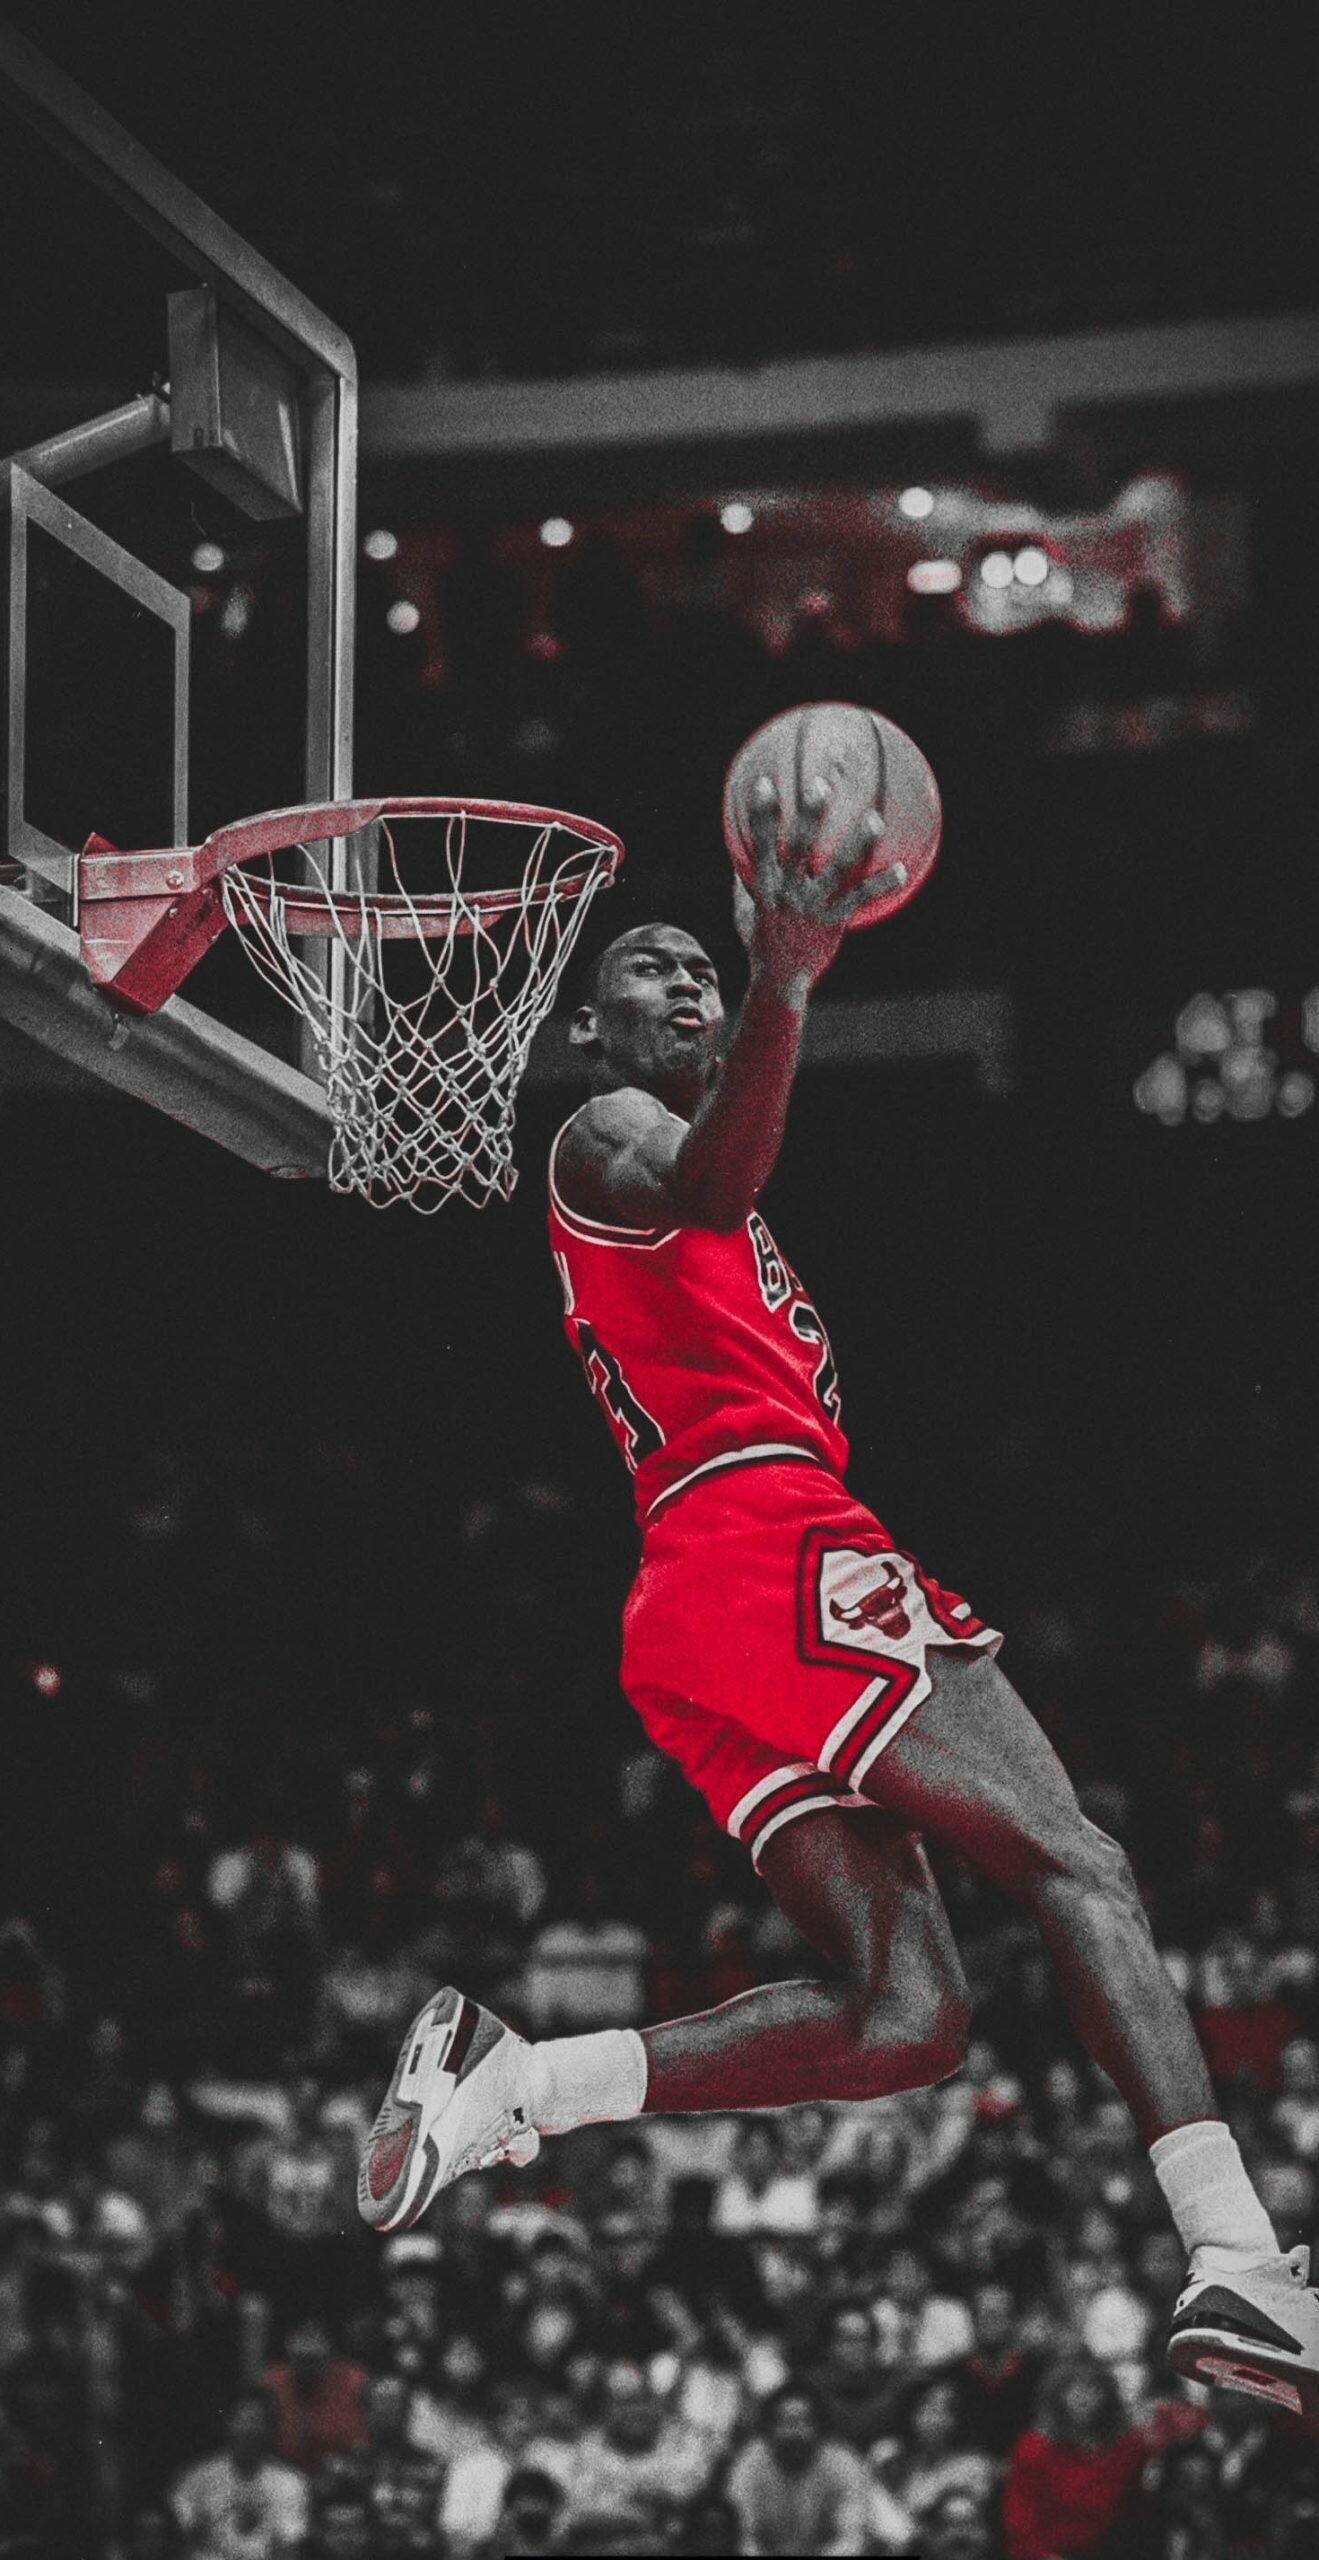 Michael Jordan: Air Jordan, Became a member of the United States Olympic Hall of Fame in 2009. 1320x2560 HD Wallpaper.